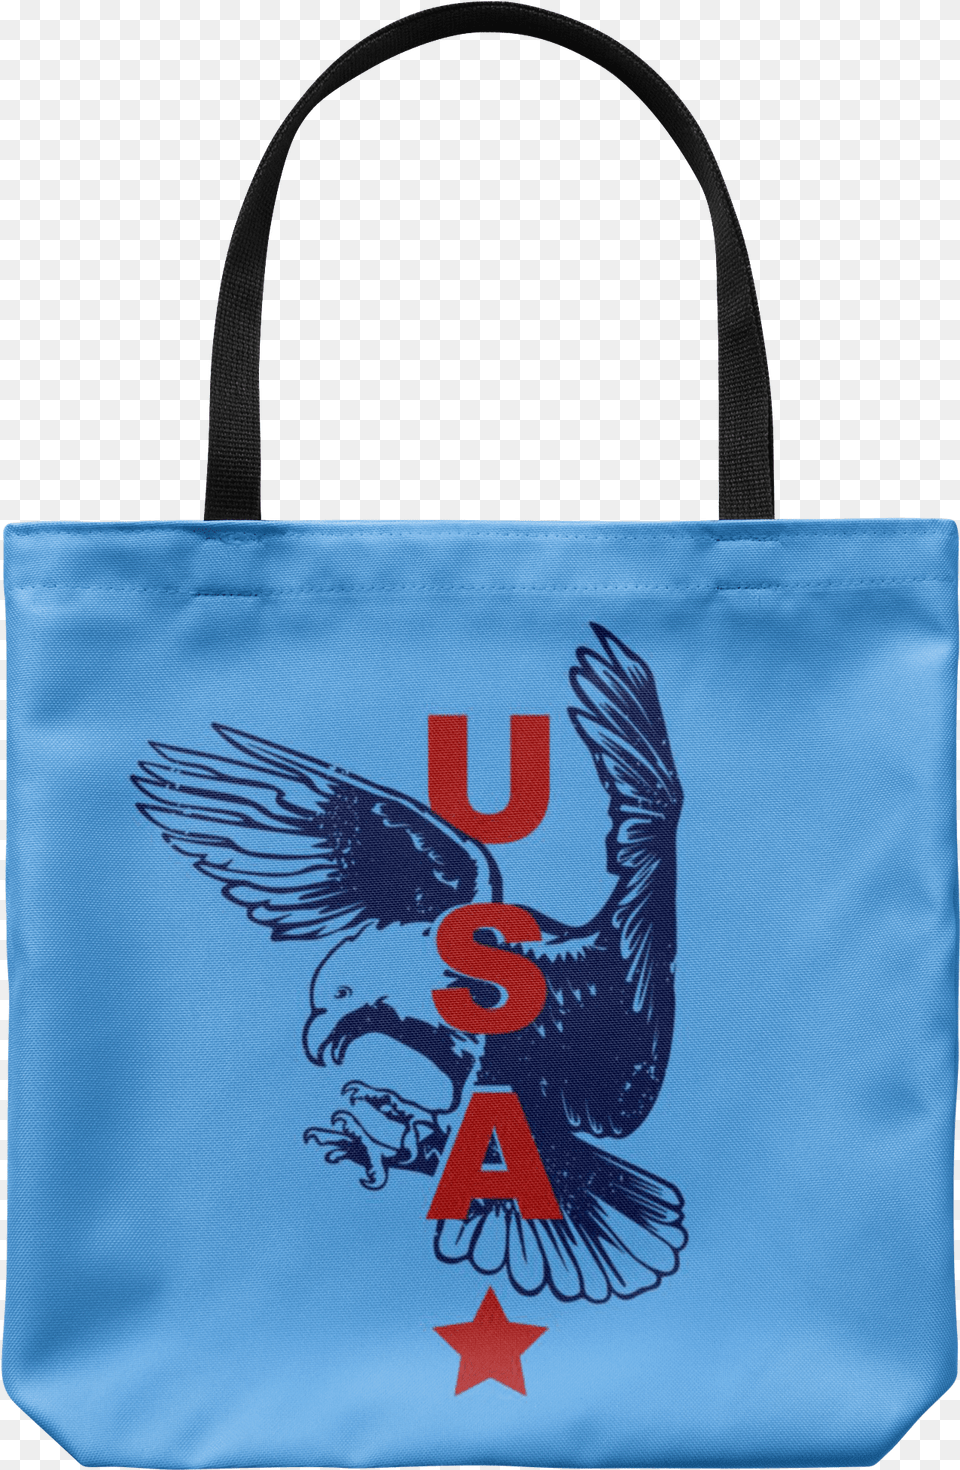 Usa Eagle, Accessories, Bag, Handbag, Tote Bag Free Transparent Png